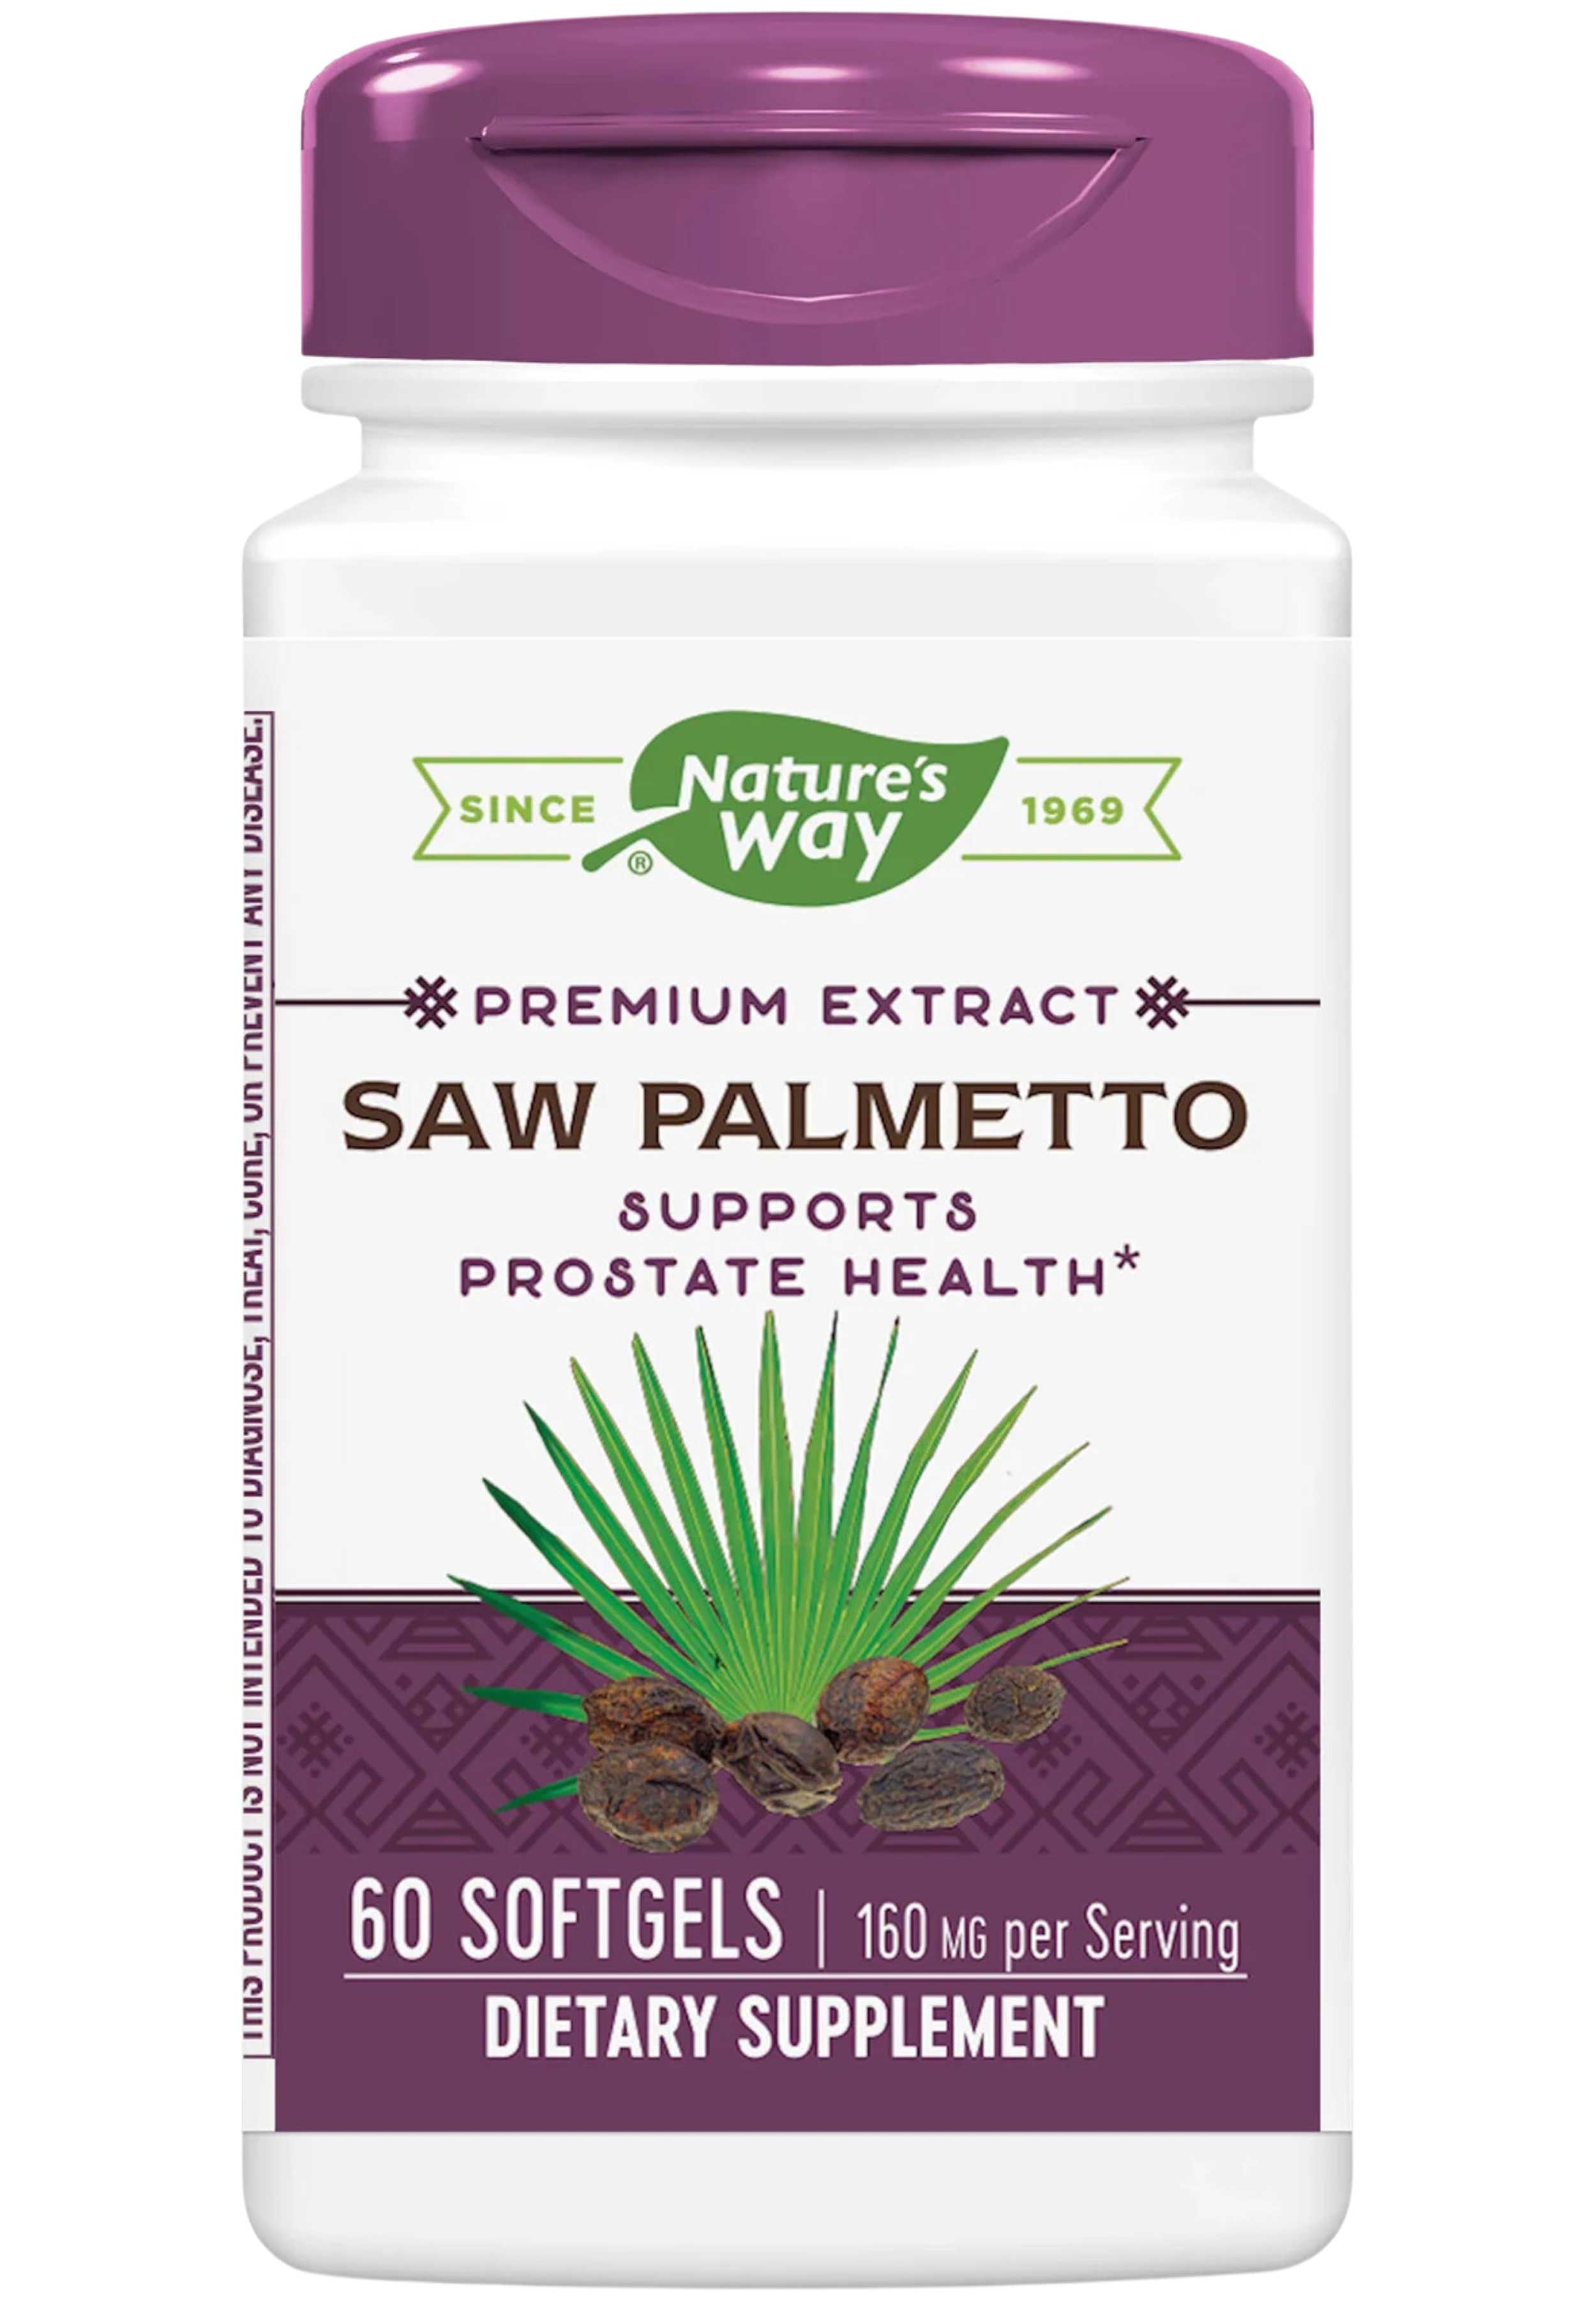 Nature's Way Saw Palmetto Premium Extract